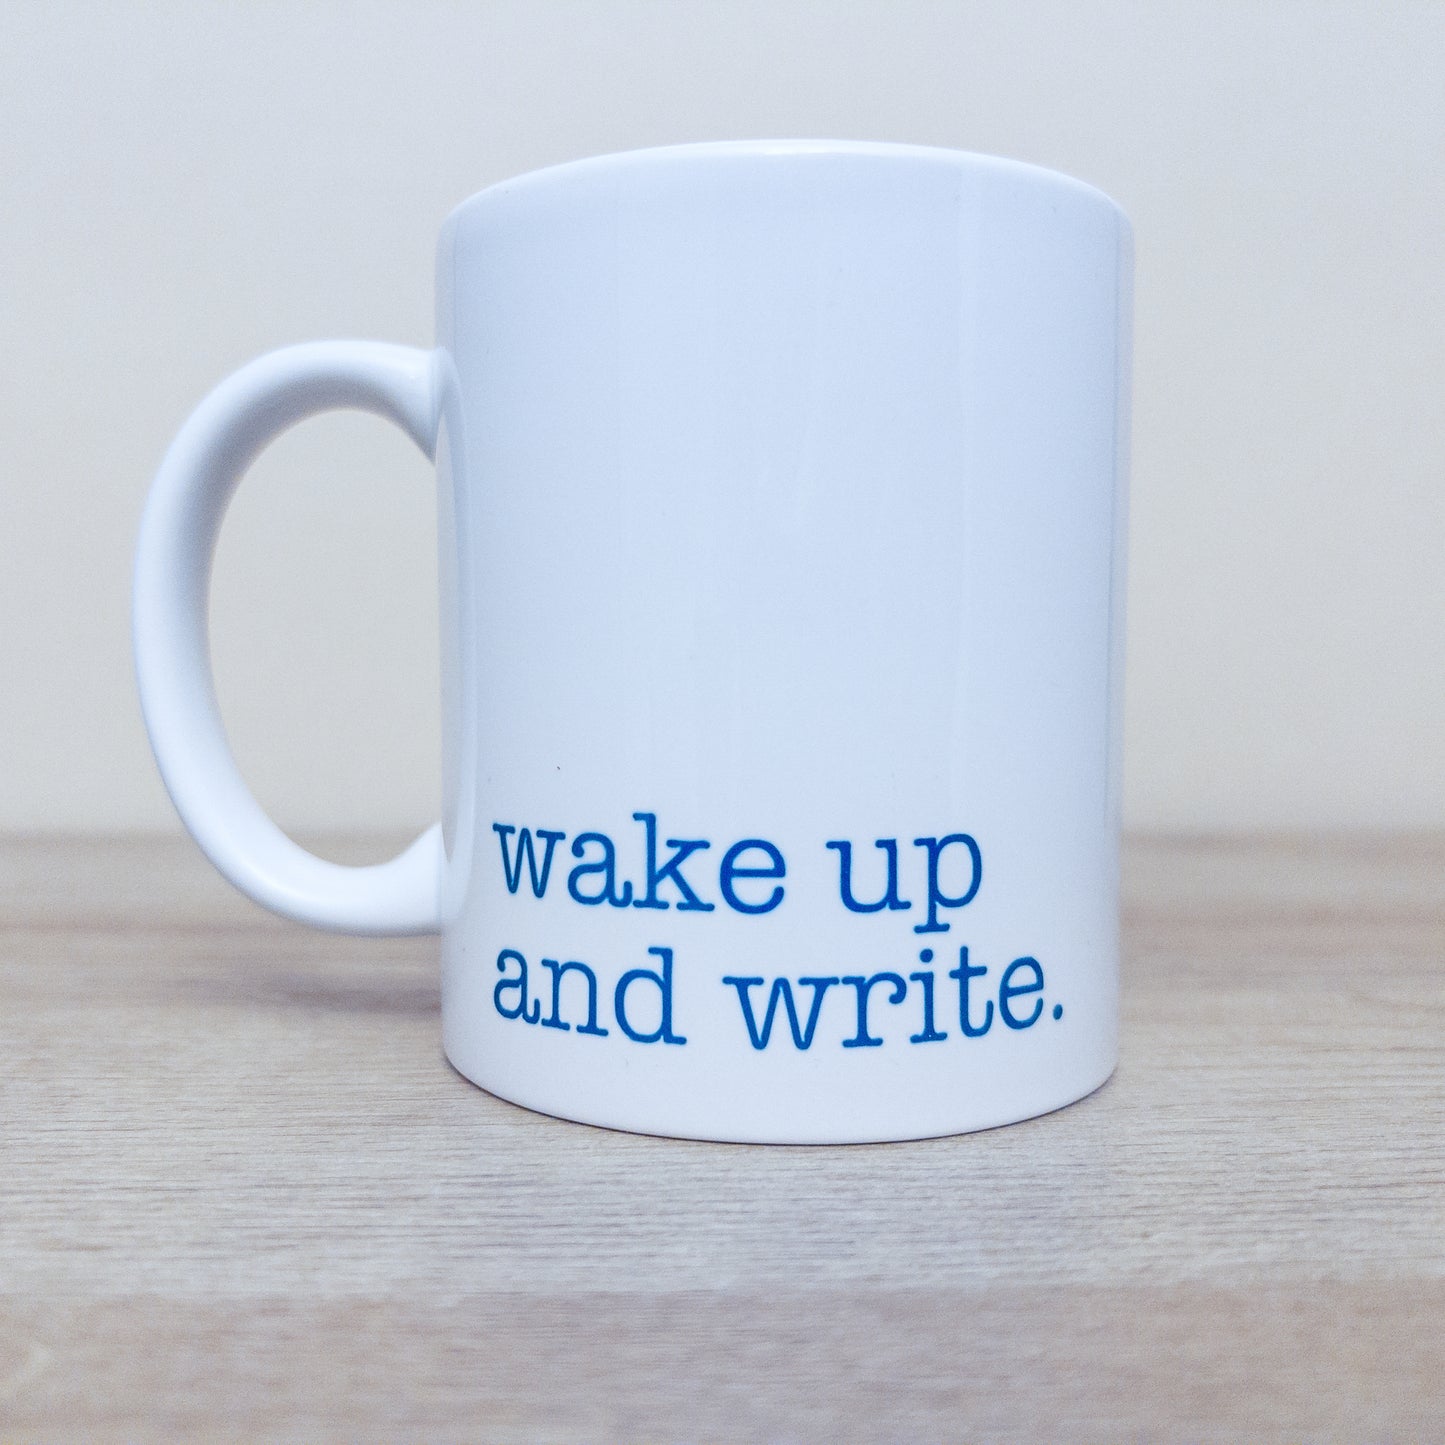 Wake Up and Write Mug